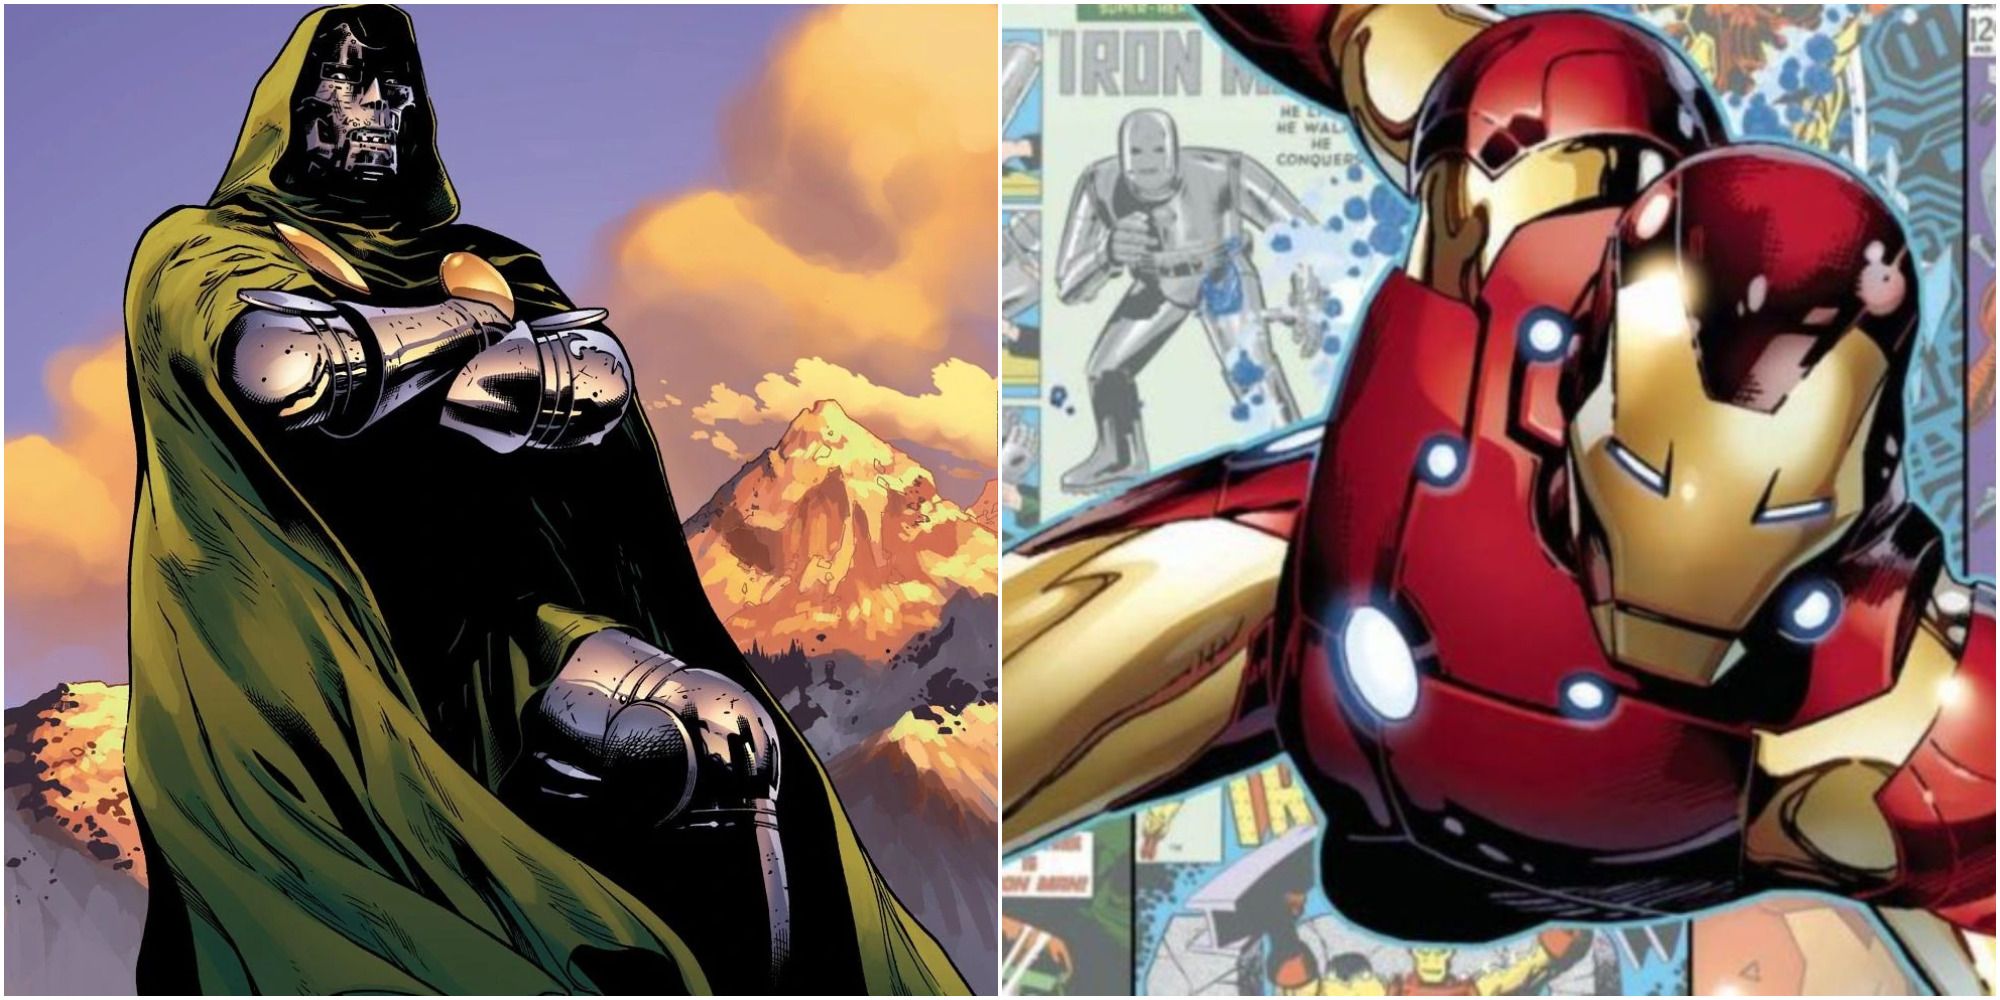 Doctor Doom and Iron Man